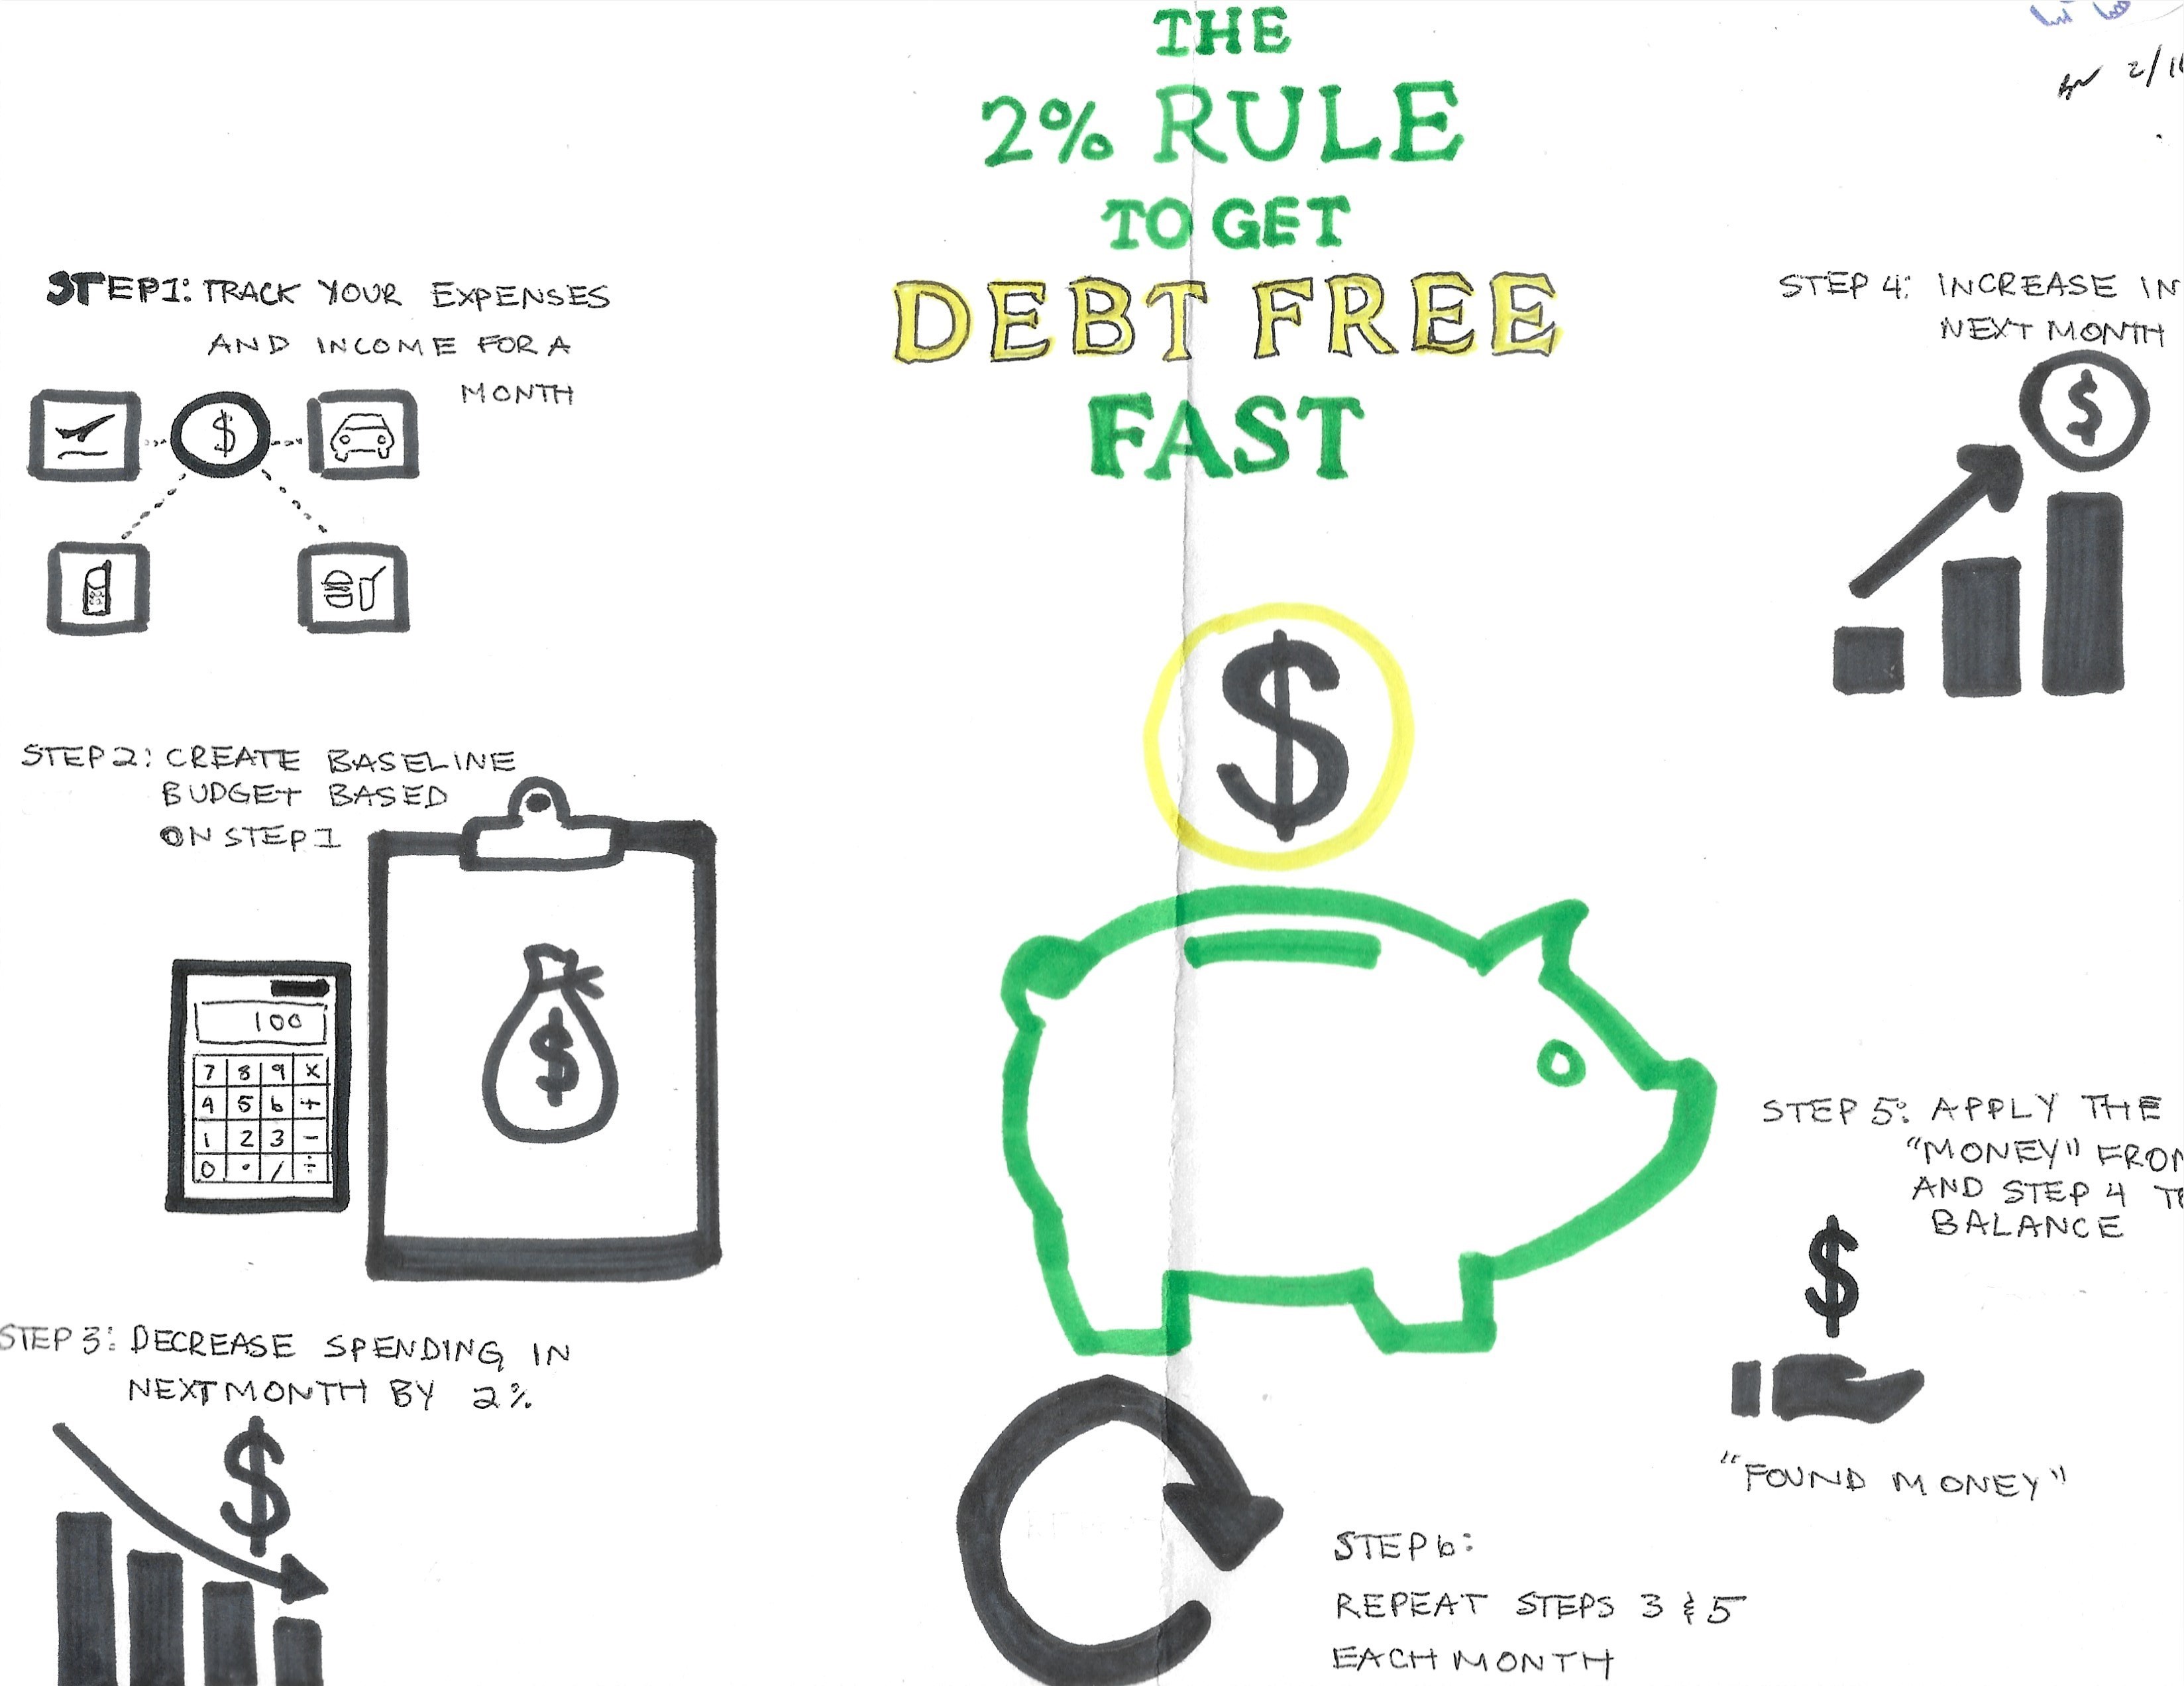 2% Rule to Get Debt Free Fast by Brian Nwokedi